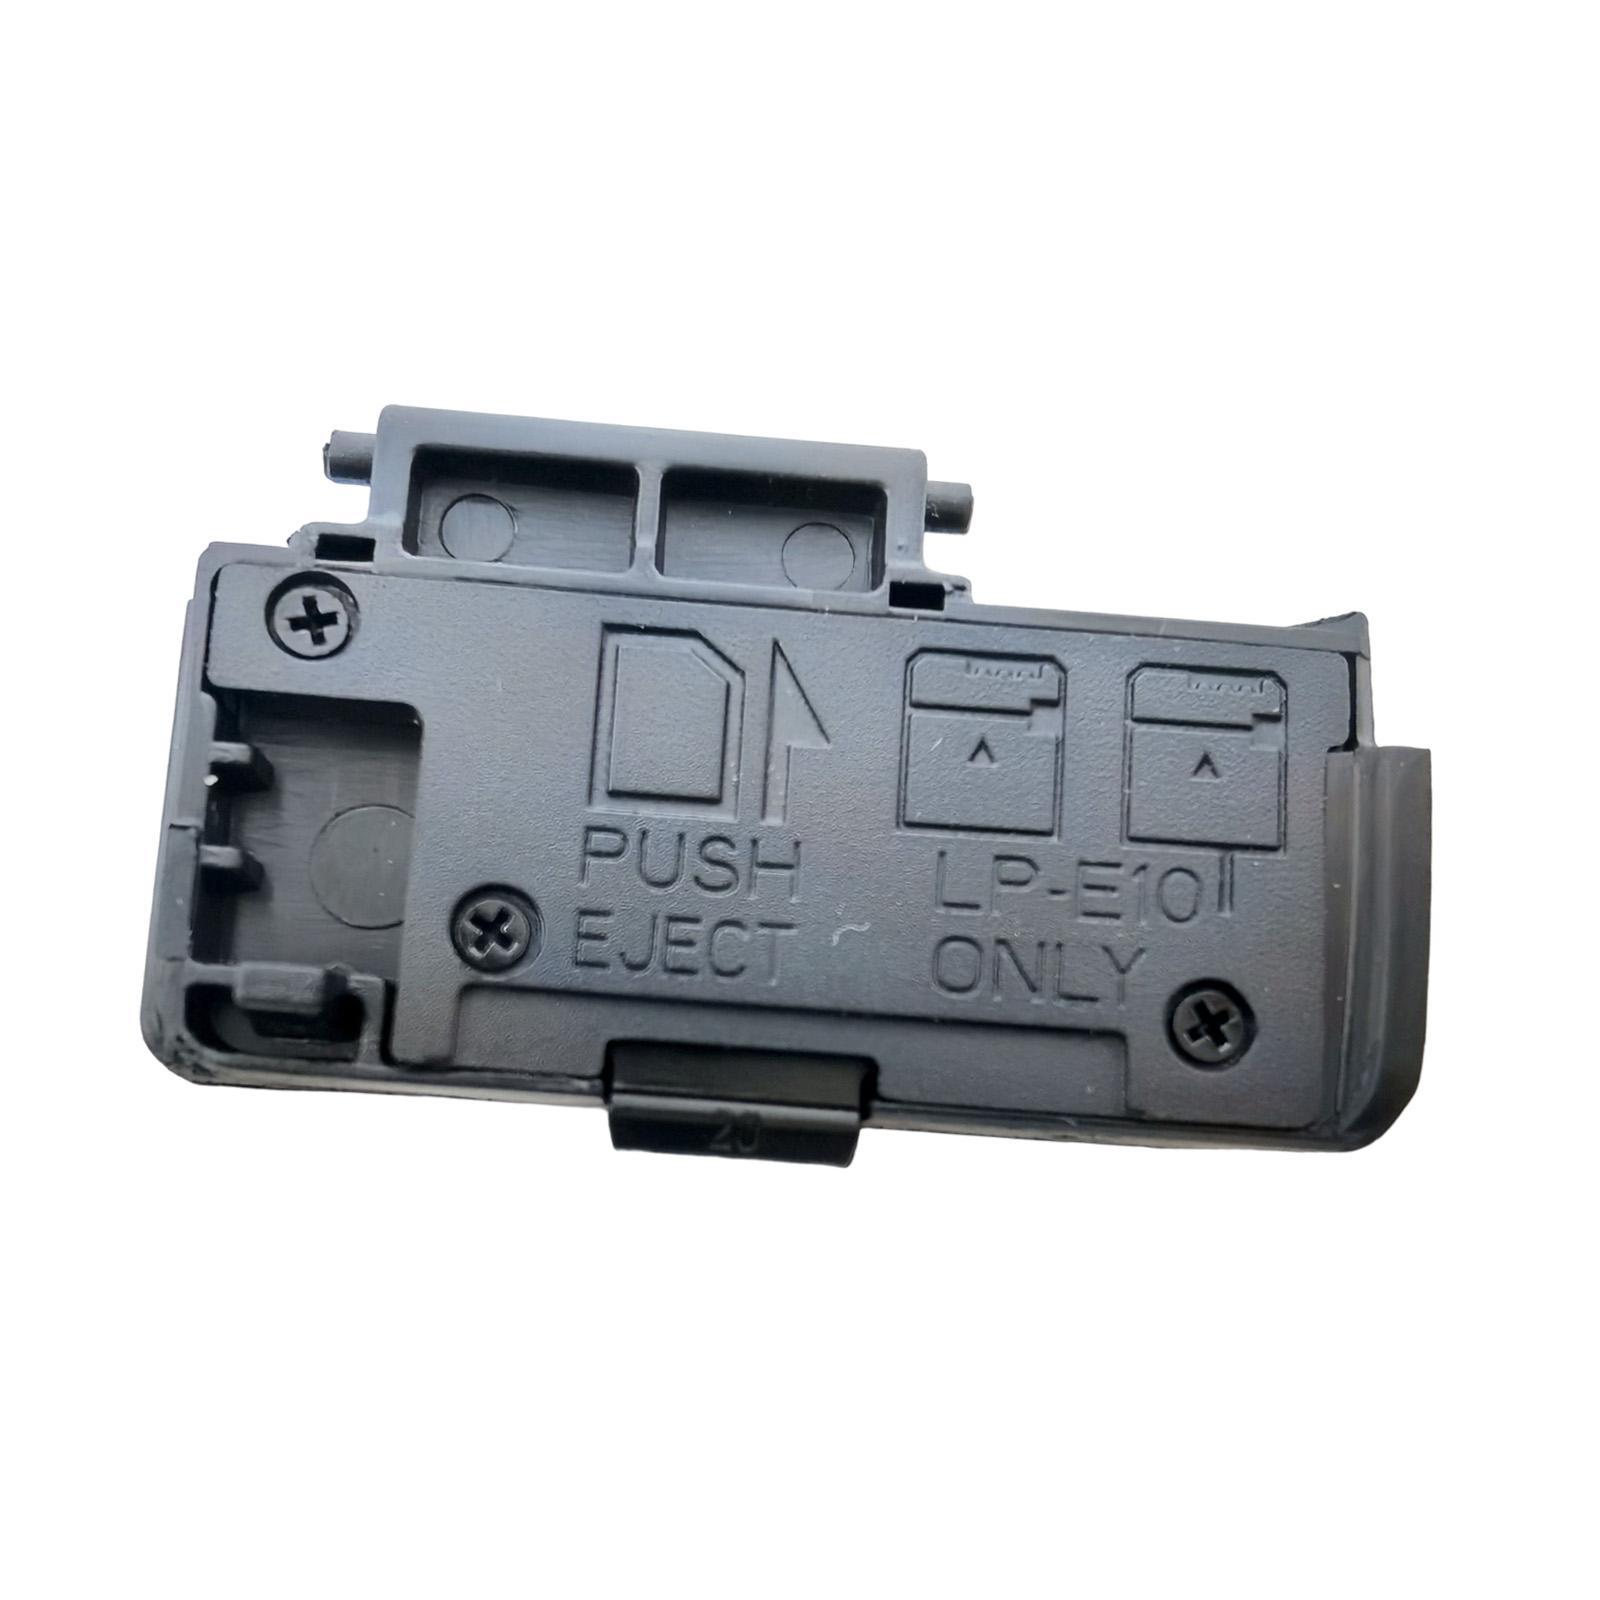 Battery Door Cover Wear Resistant Batteries Lid Cap for 1300D Unit